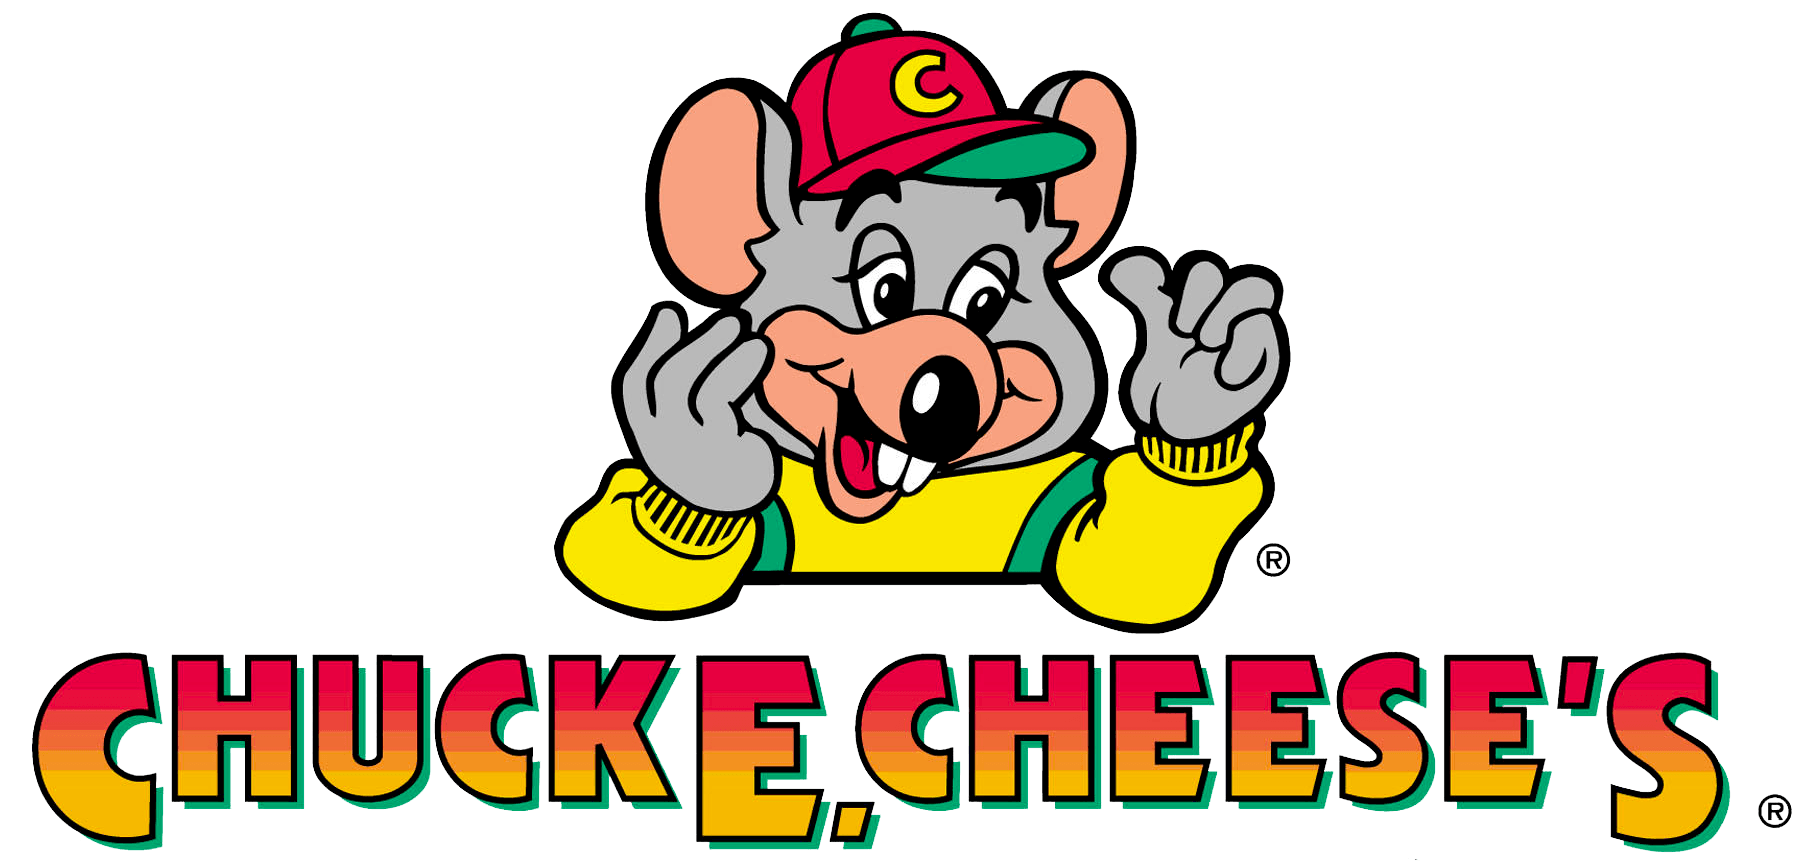 Chuck E. Cheese Logo - Chuck E. Cheese's | Logopedia | FANDOM powered by Wikia